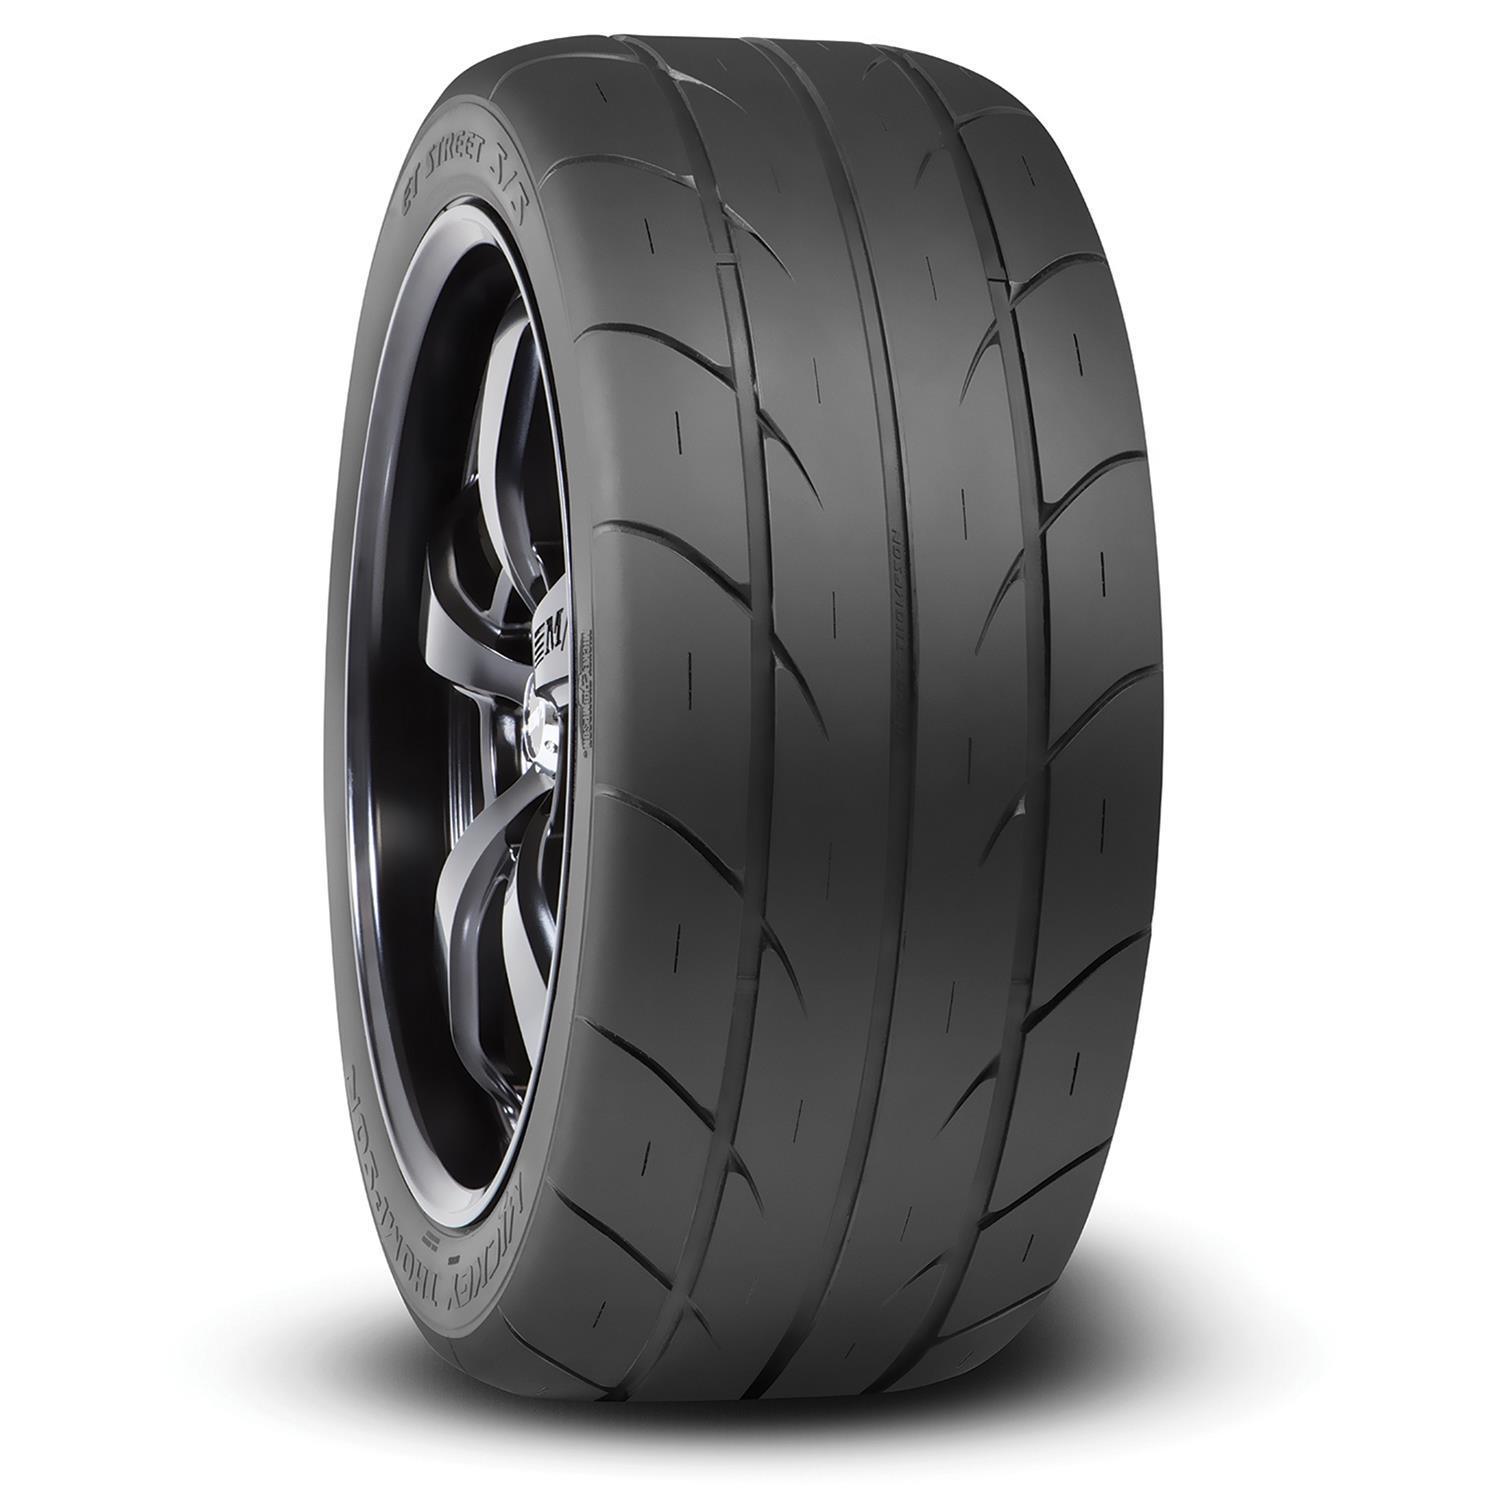 P275/60R15 ET Street S/S Tire - Burlile Performance Products